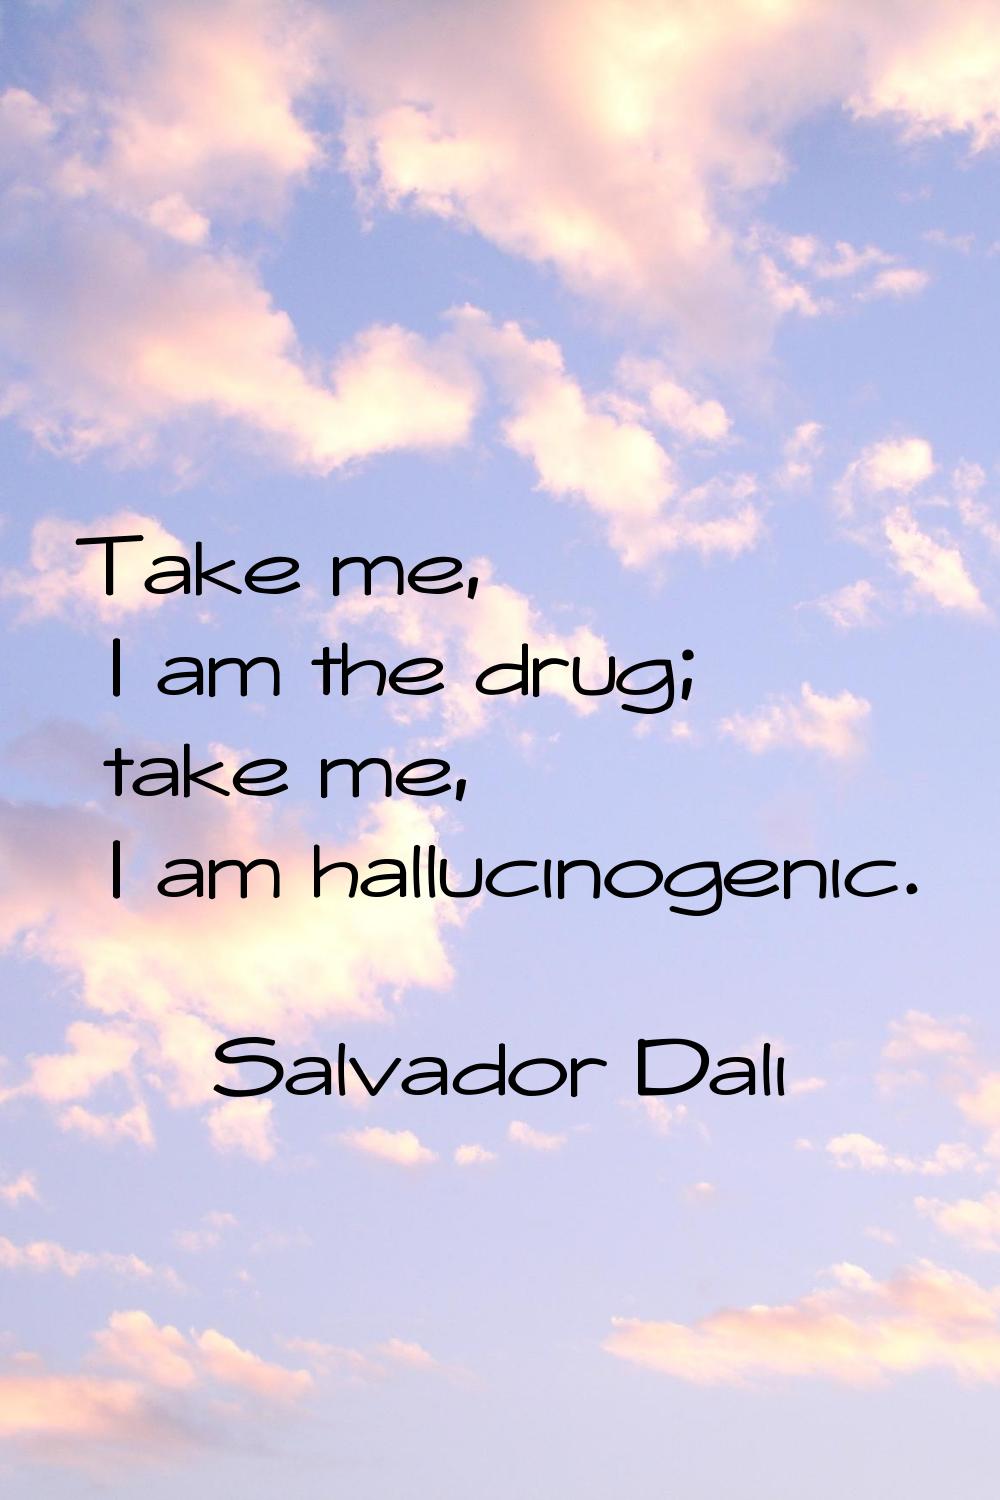 Take me, I am the drug; take me, I am hallucinogenic.